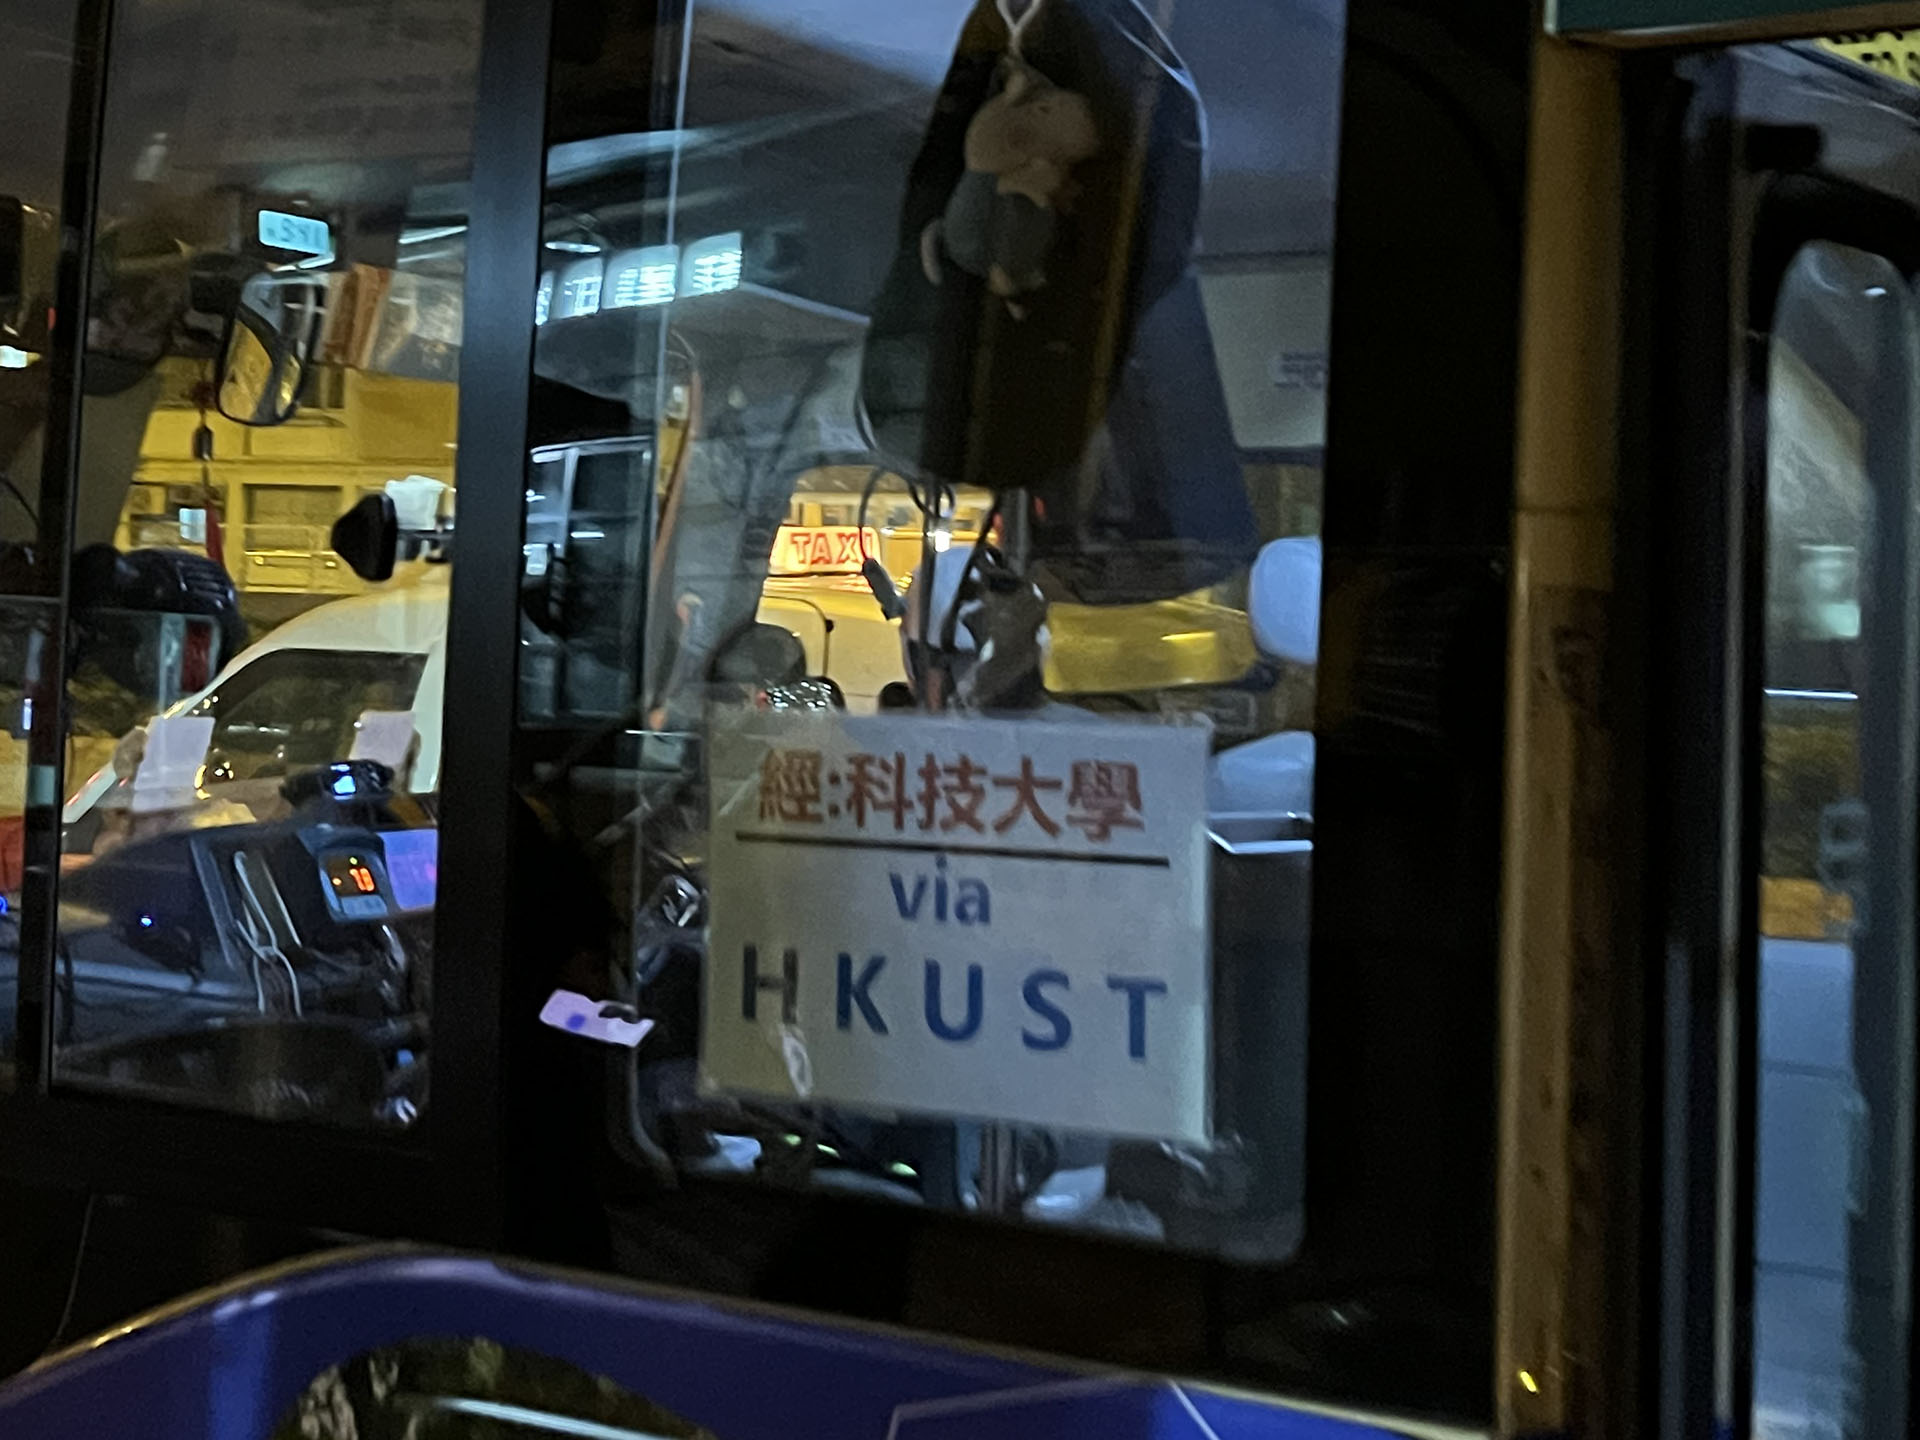 "via HKUST" User-friendly Sign beside a Bus